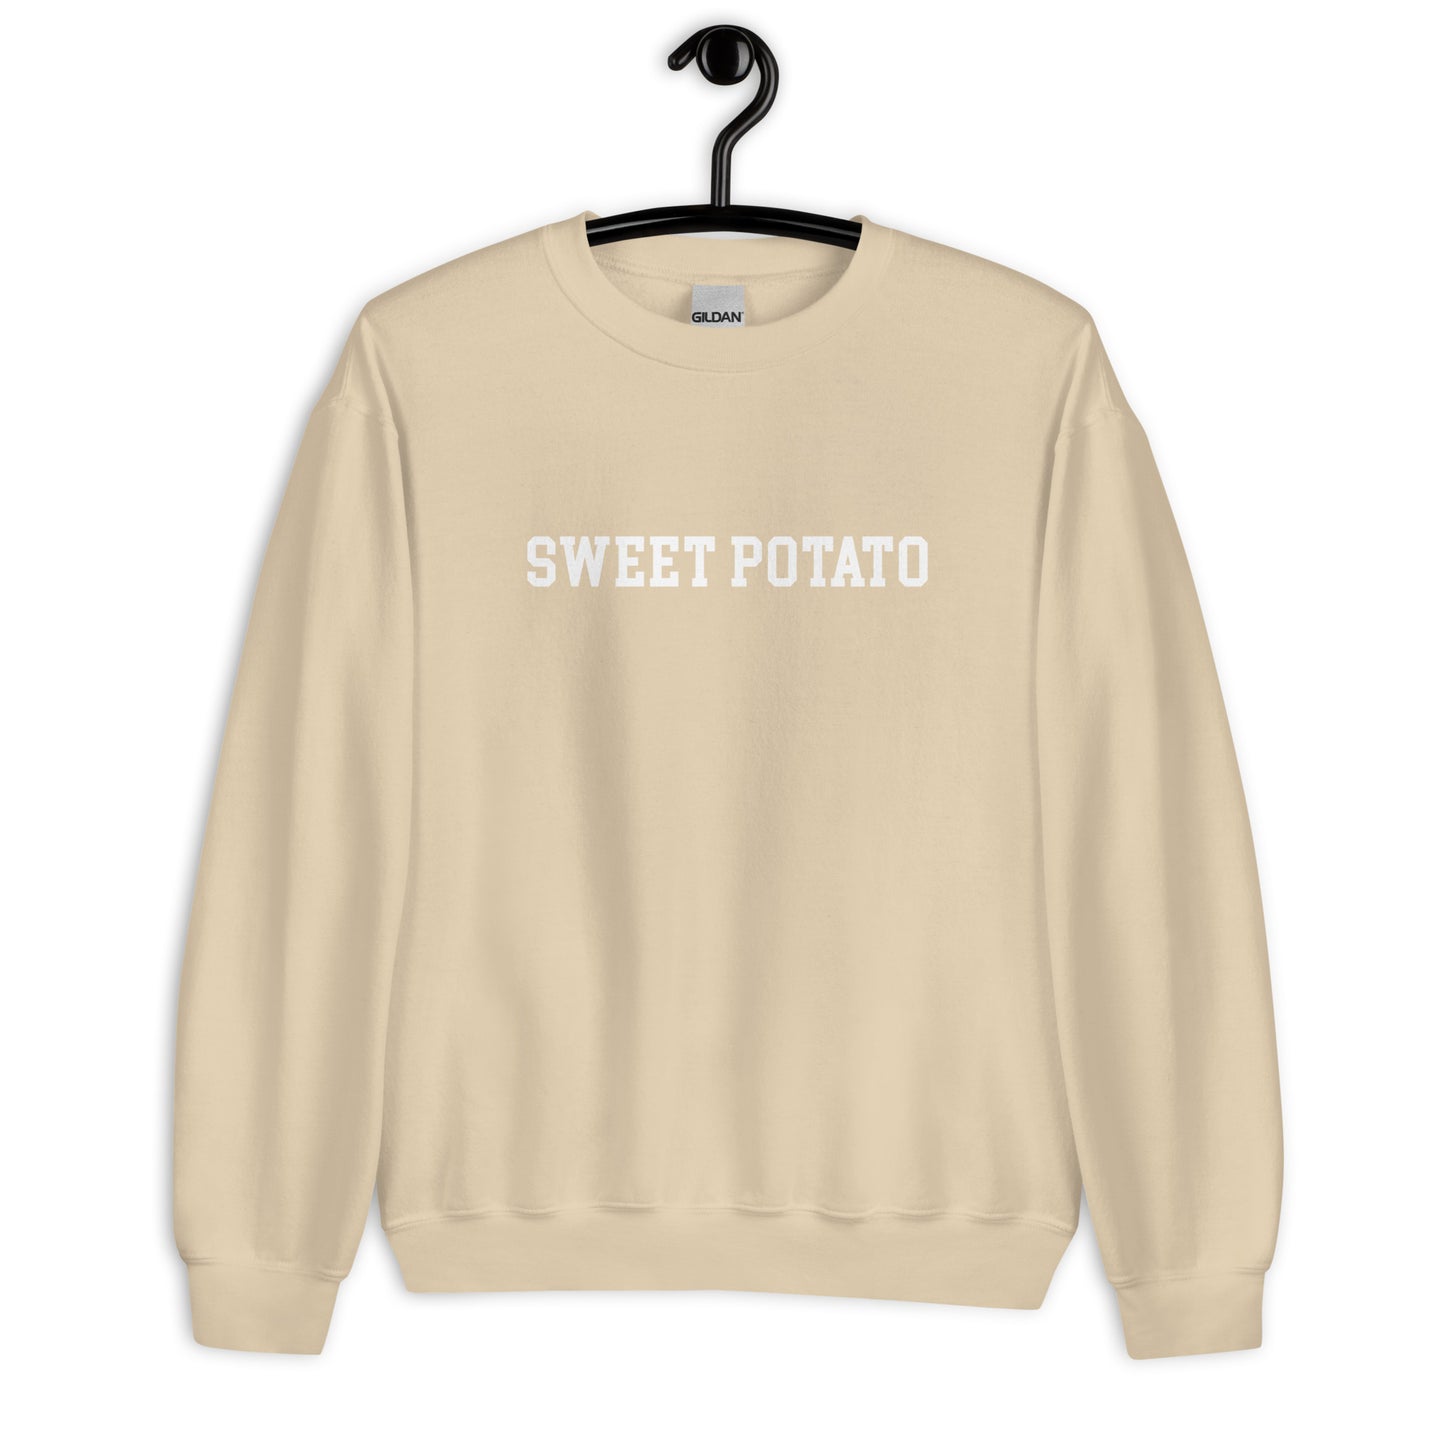 Sweet Potato Sweatshirt - Straight Font